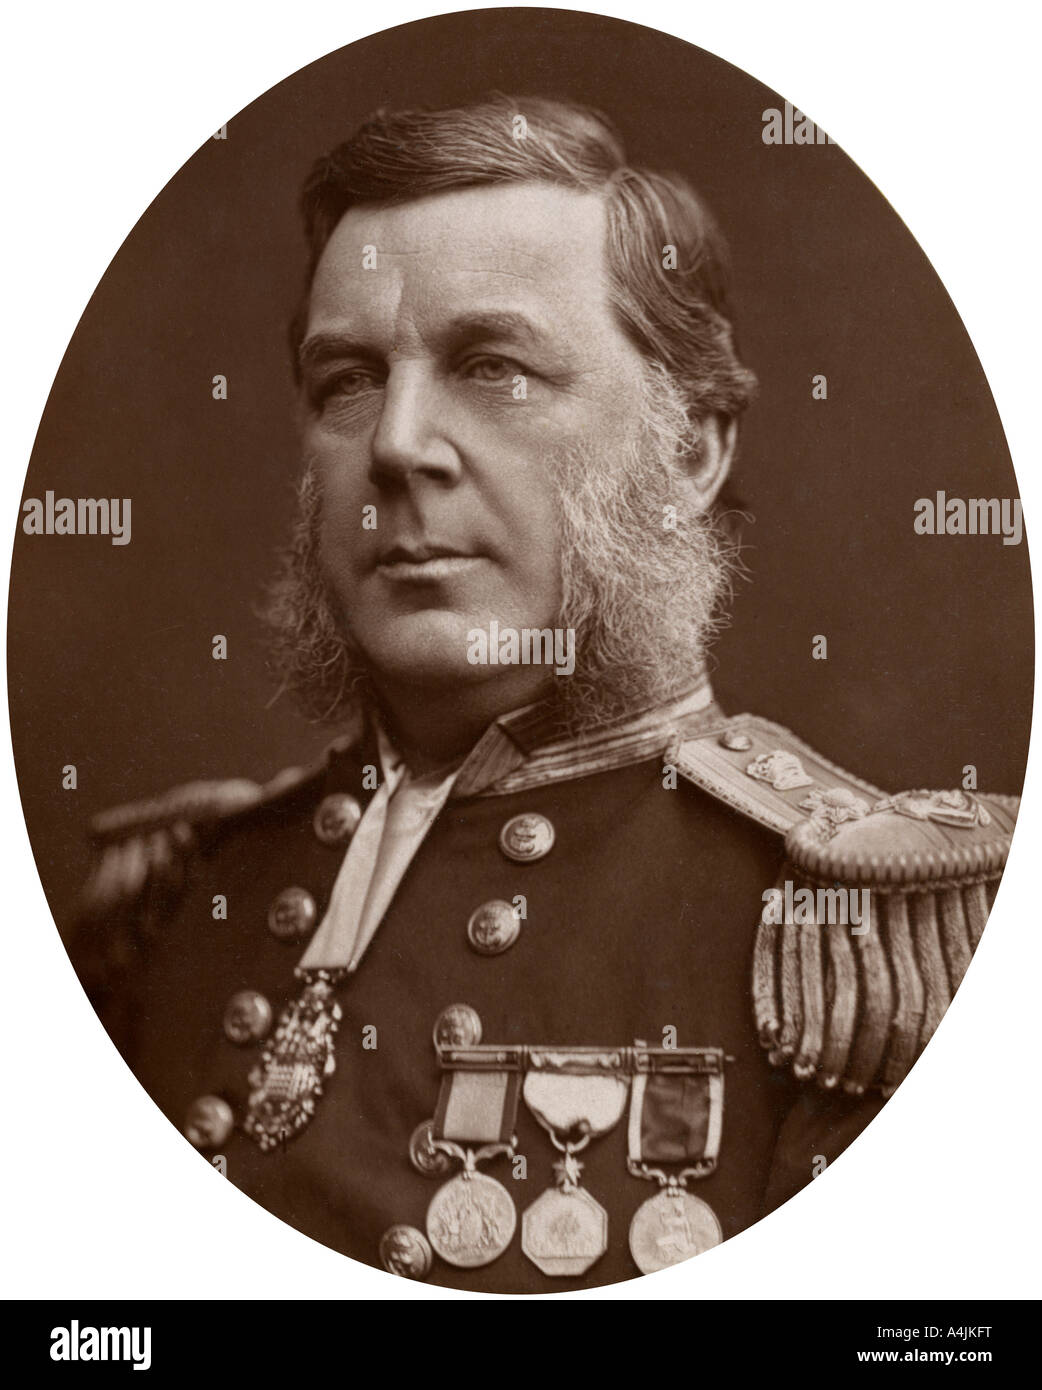 Captain Bedford Clapperton Trevelyan Pim, British naval officer, 1883.Artist: Lock & Whitfield Stock Photo